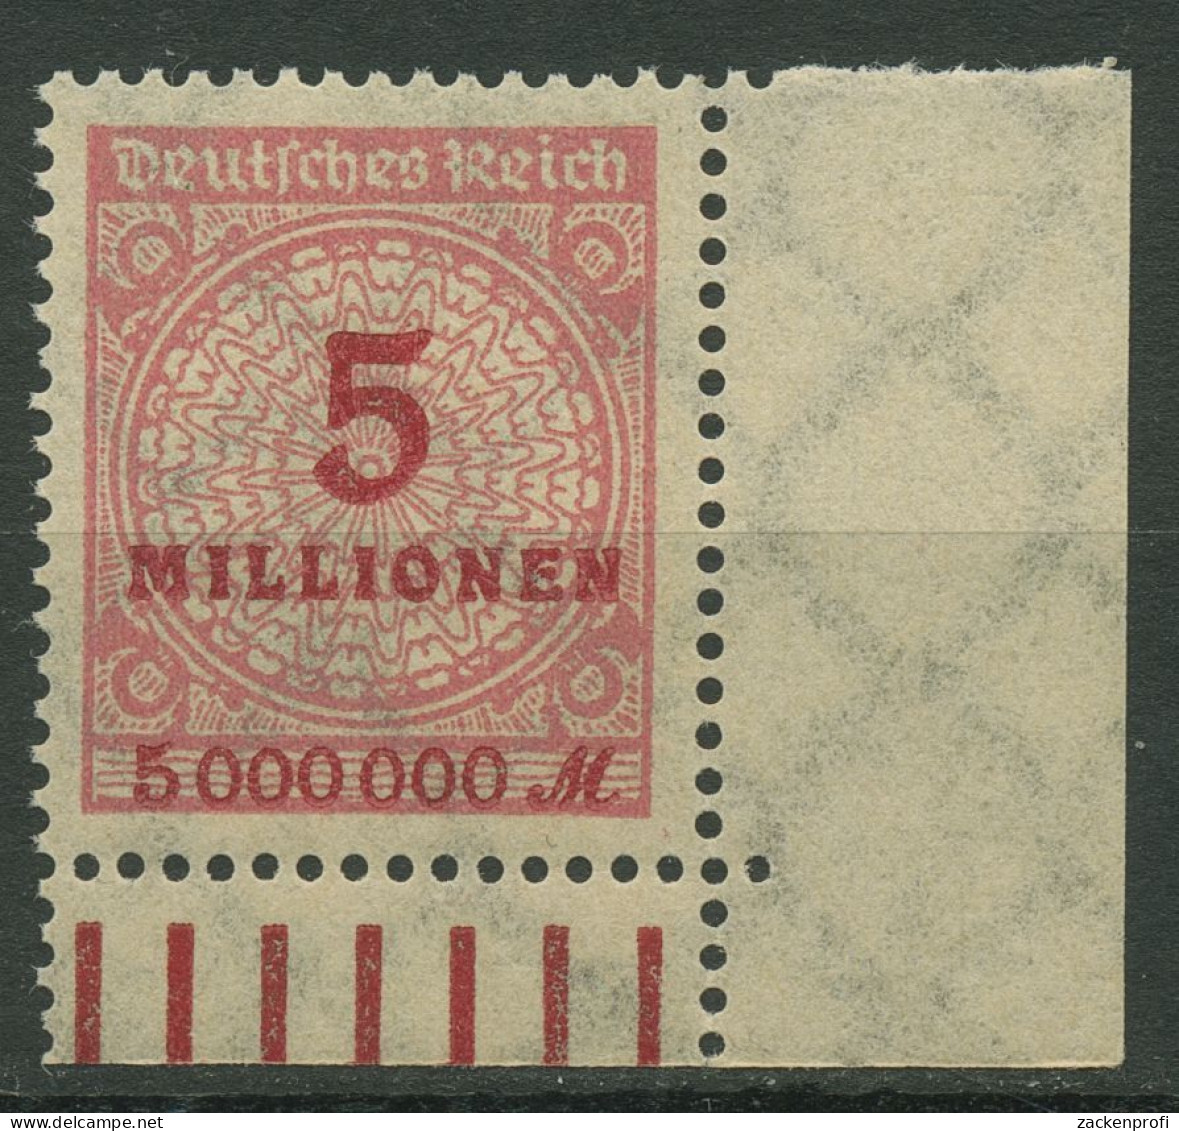 Deutsches Reich Inflation 1923 Korbdeckel Walze 317 AW Ecke Unt. Re. Postfrisch - Ongebruikt